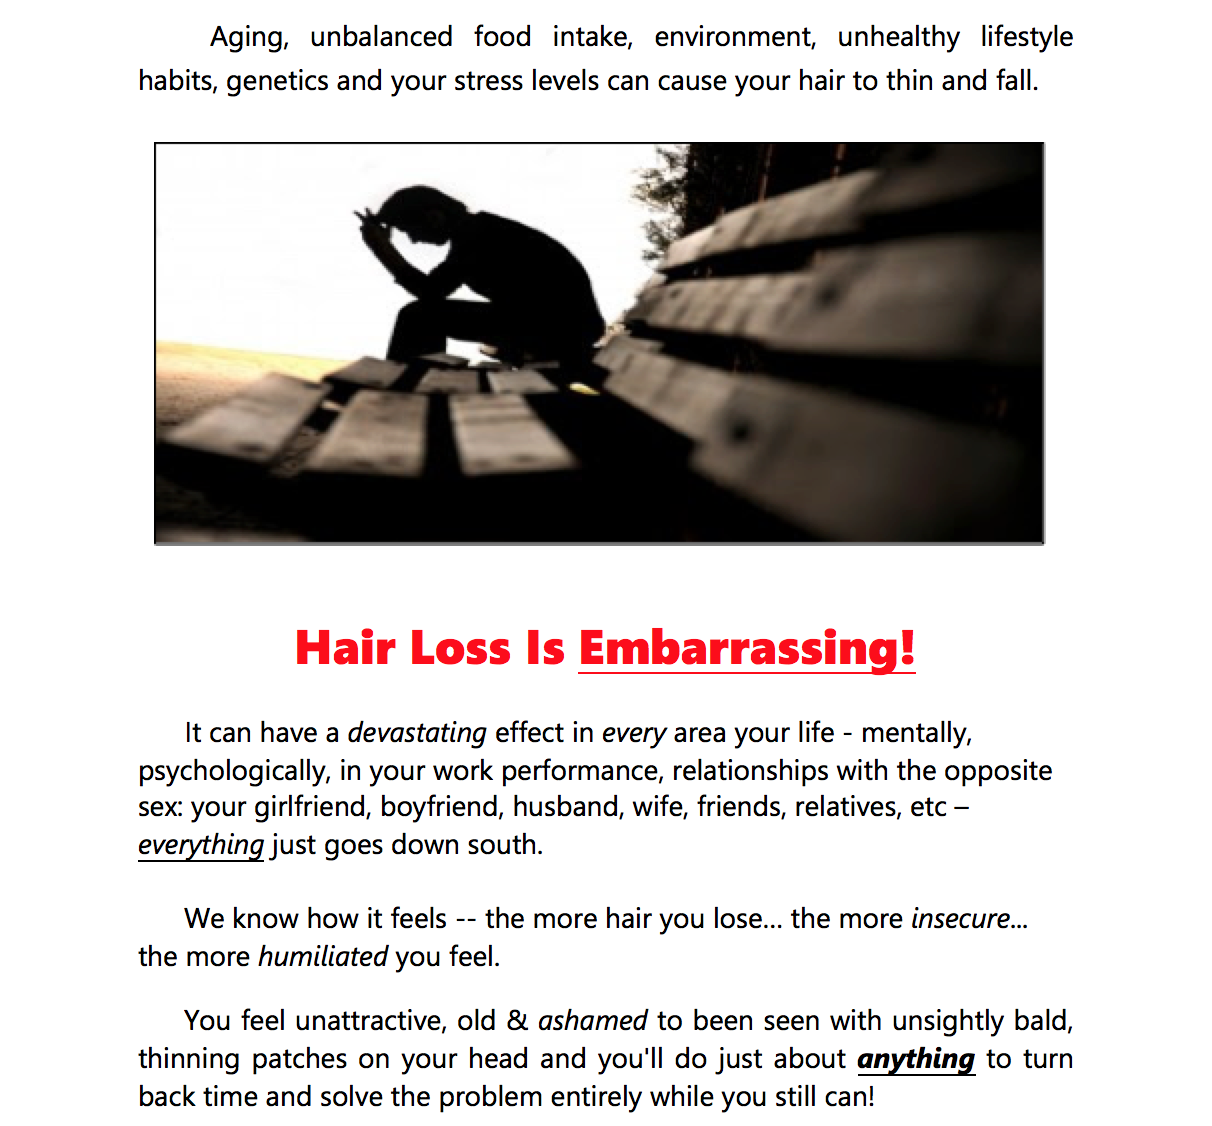 EcoHerbs Neem Care Scalp Rejuvenation Package For Hair Loss, Hair Fall, Thinning Hair, Softer, Stronger Hair (FOR WOMEN)